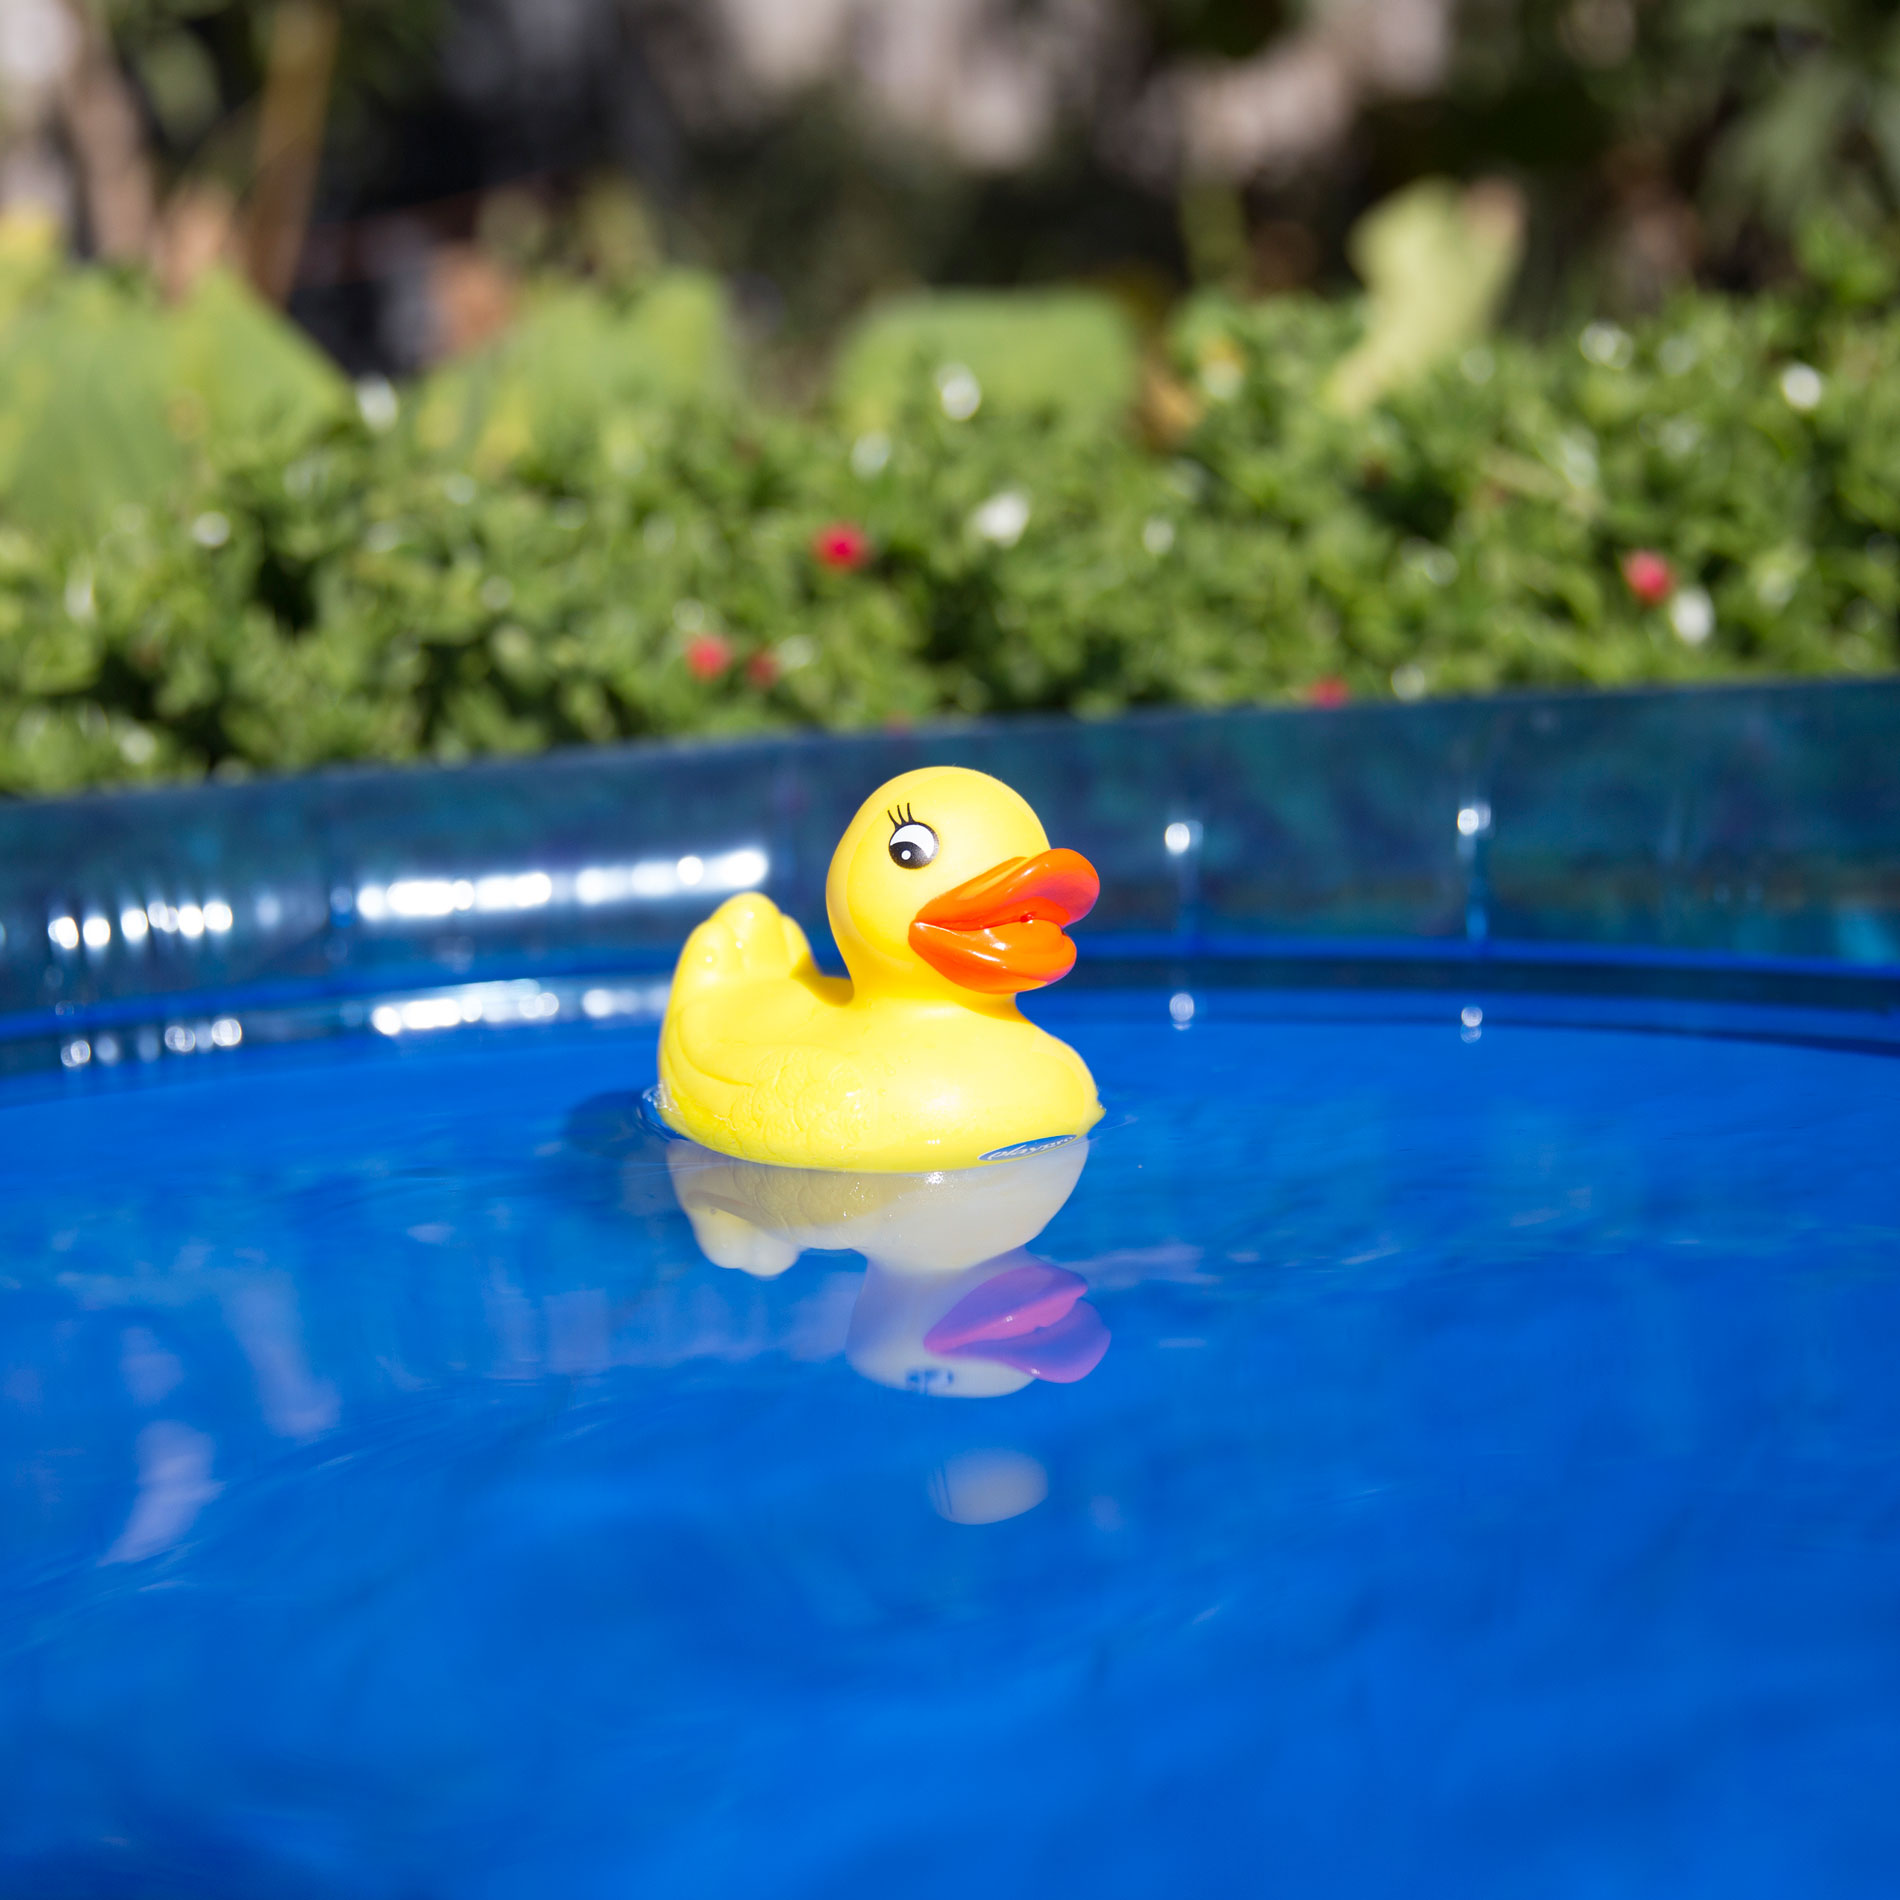 Bath Duckie – Fully Sealed – Playgro International